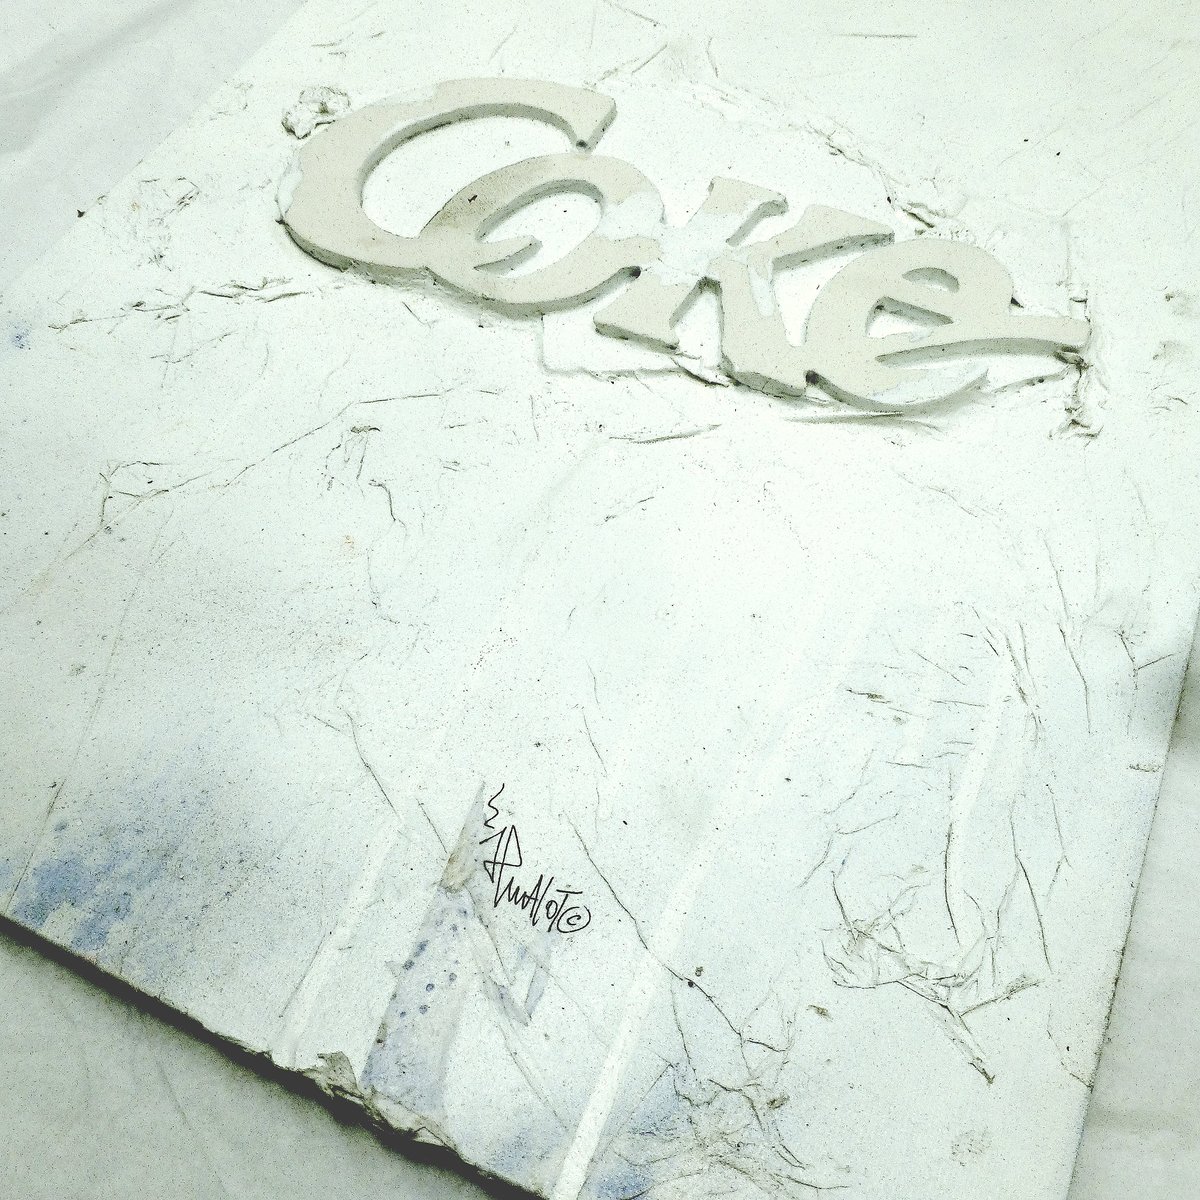 Image of JP Malot. 'Coke' Brut. 2021. 40x30. Signed + COA. Frame included.